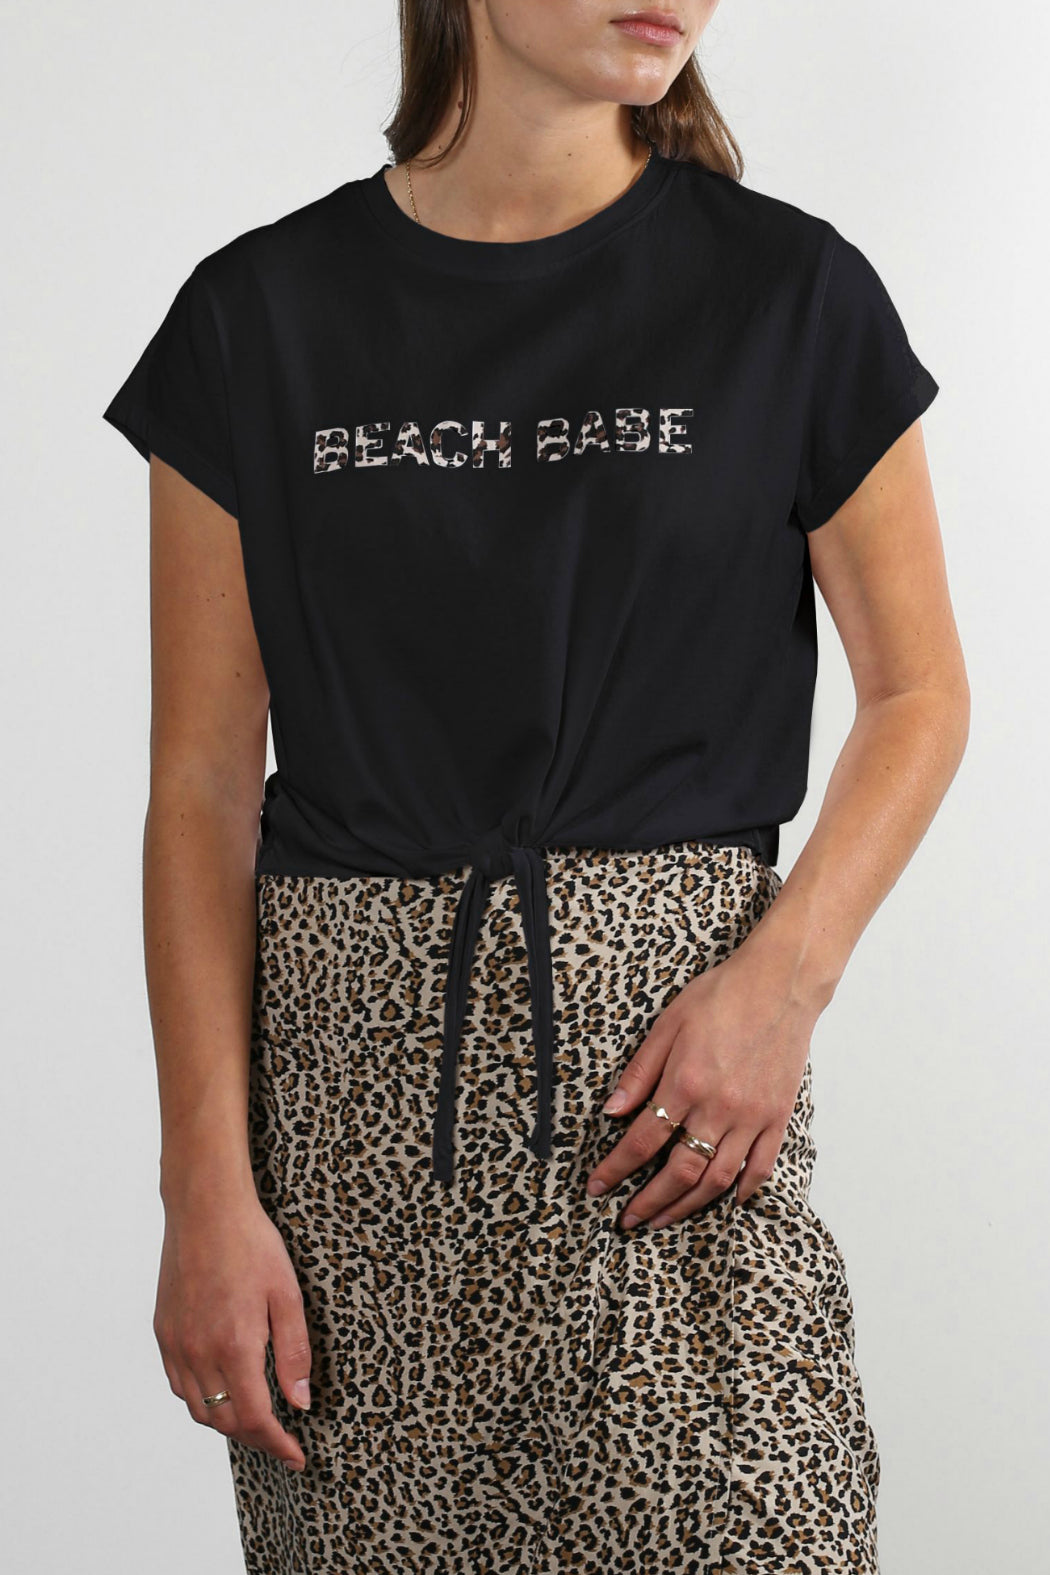 Le T-shirt « BEACH BABE » - Noir| Koy Resort x Brunette - Liquidation